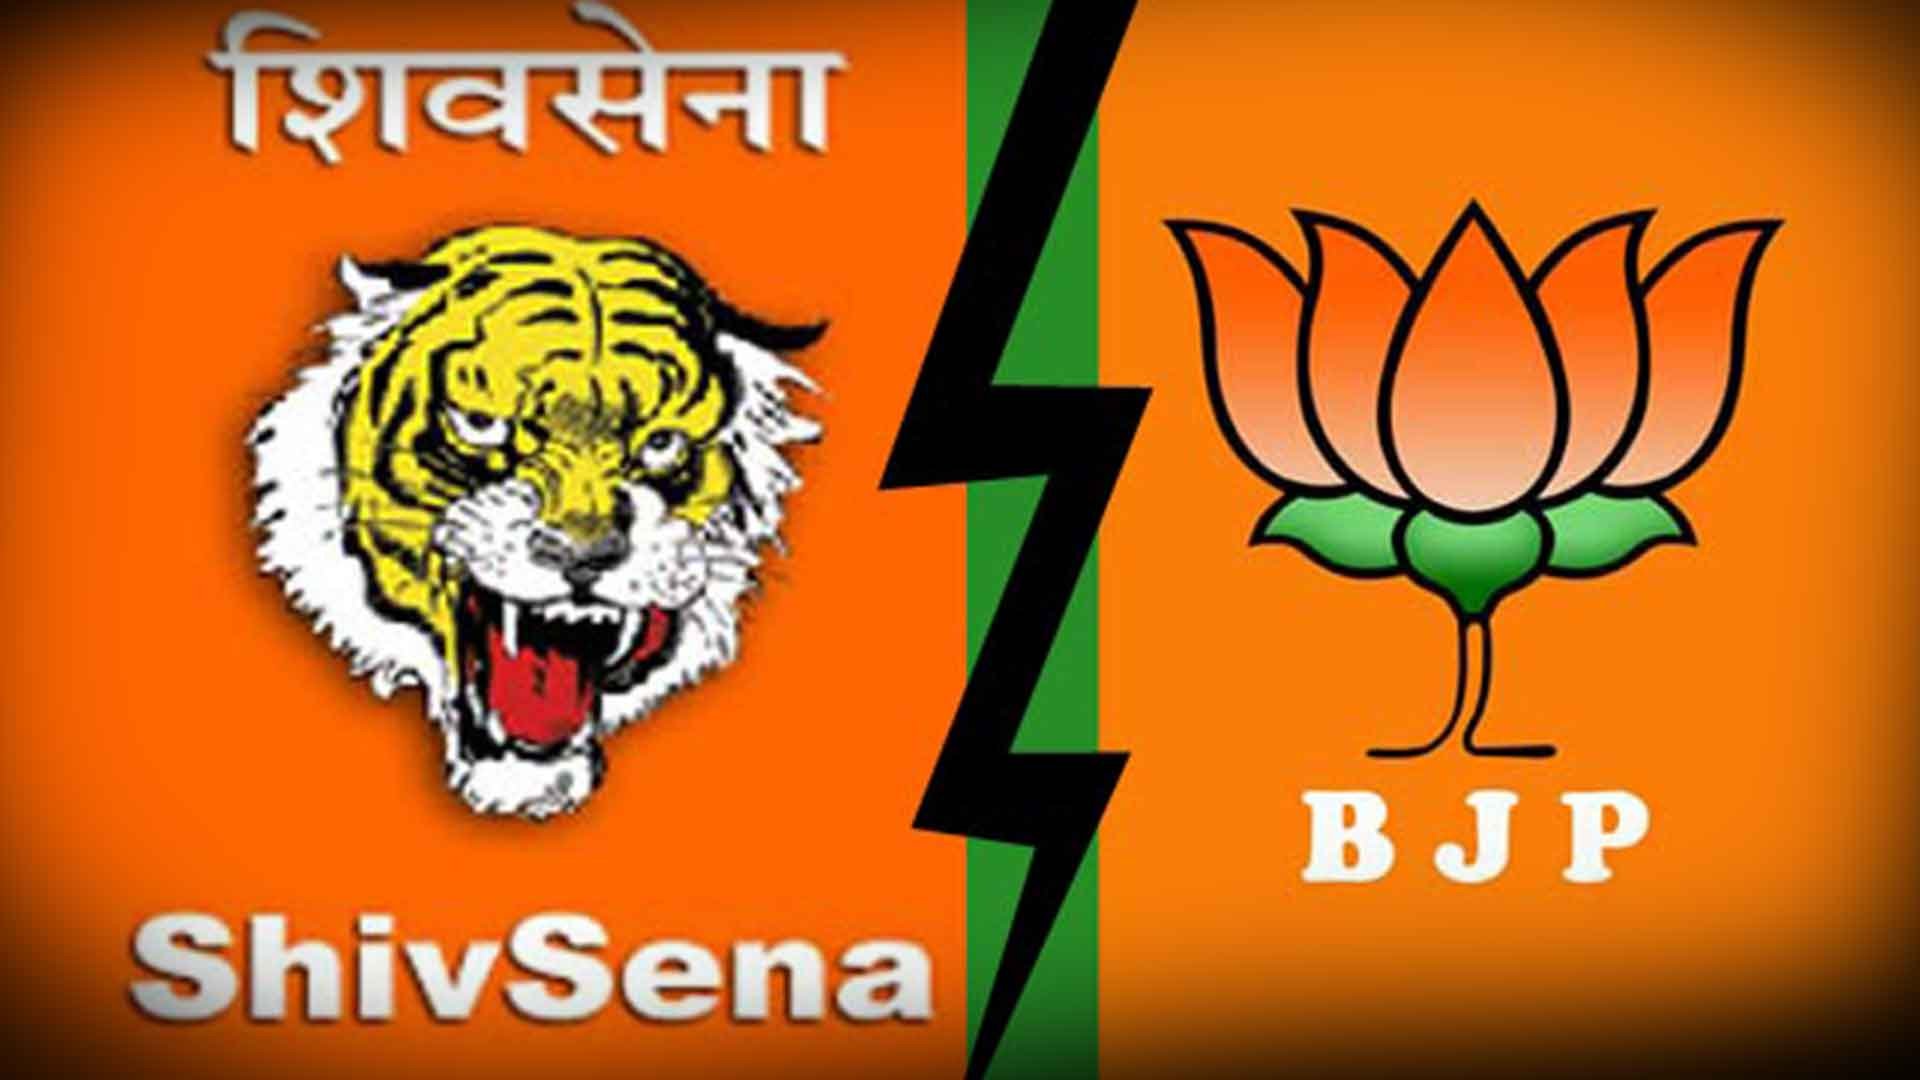 Shiv Sena And Bjp - 1920x1080 Wallpaper 